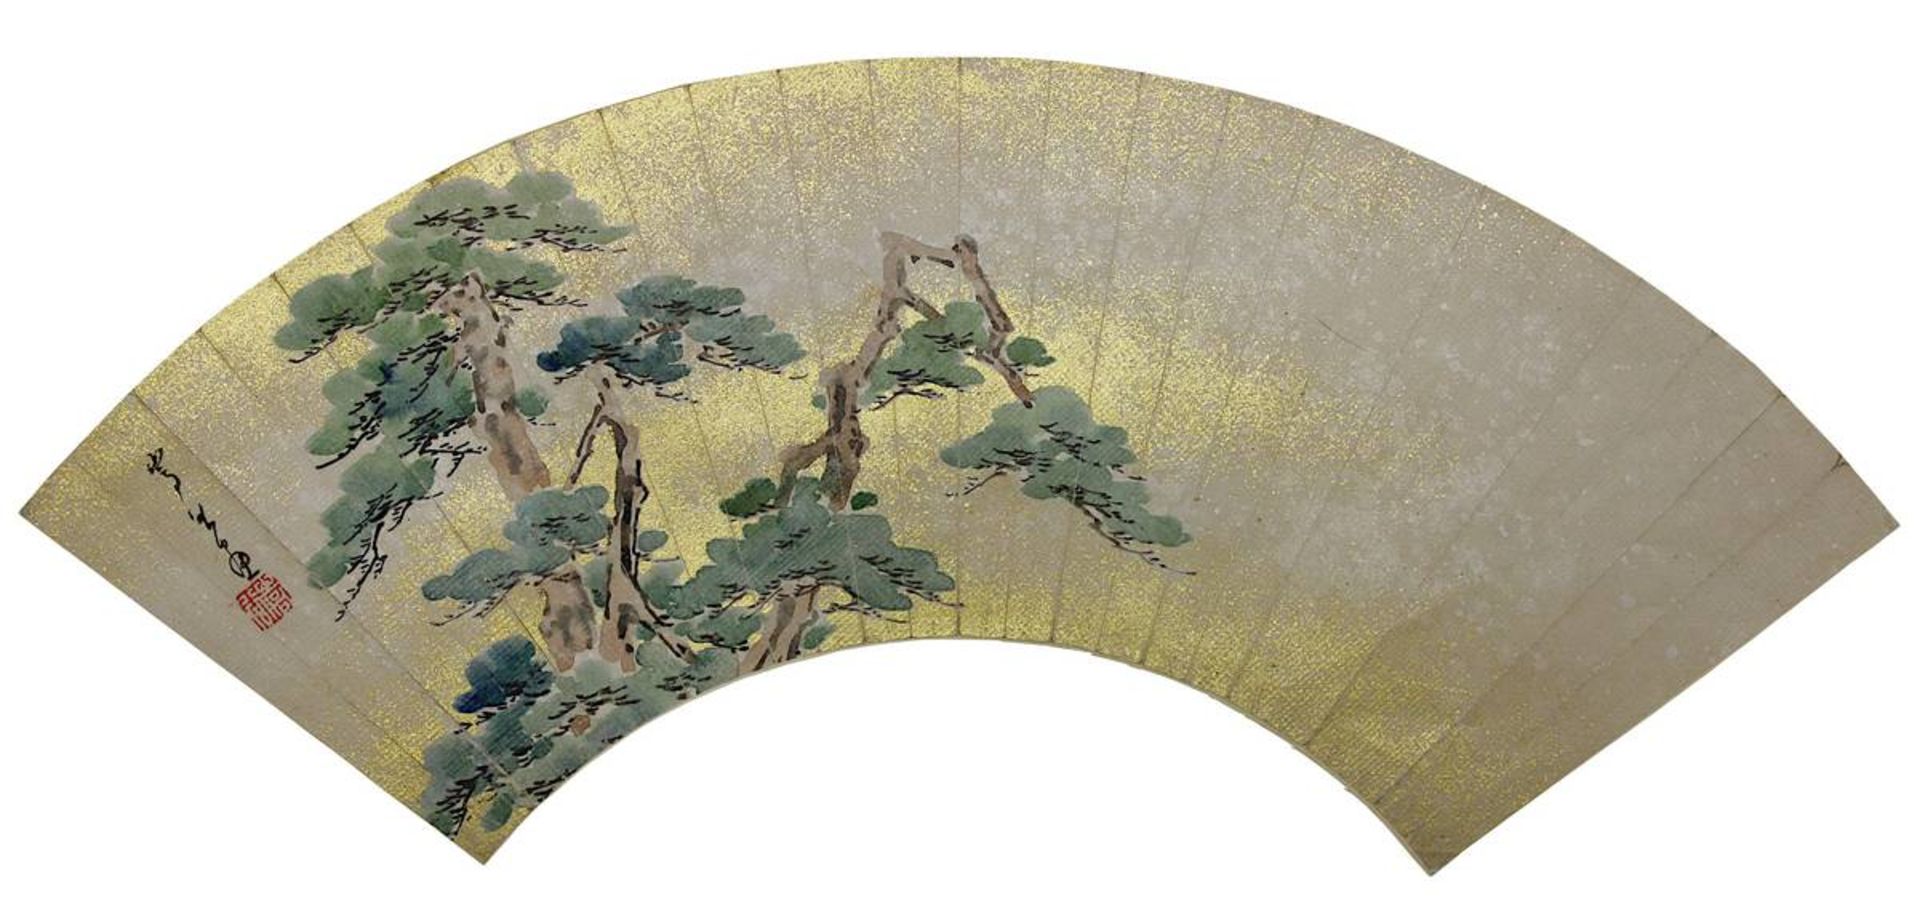 Ko Sukoku (1730 - 1804), Kiefern, bemaltes japanisches Faltfächerblatt, Edo frühes 19. Jh., Tusche